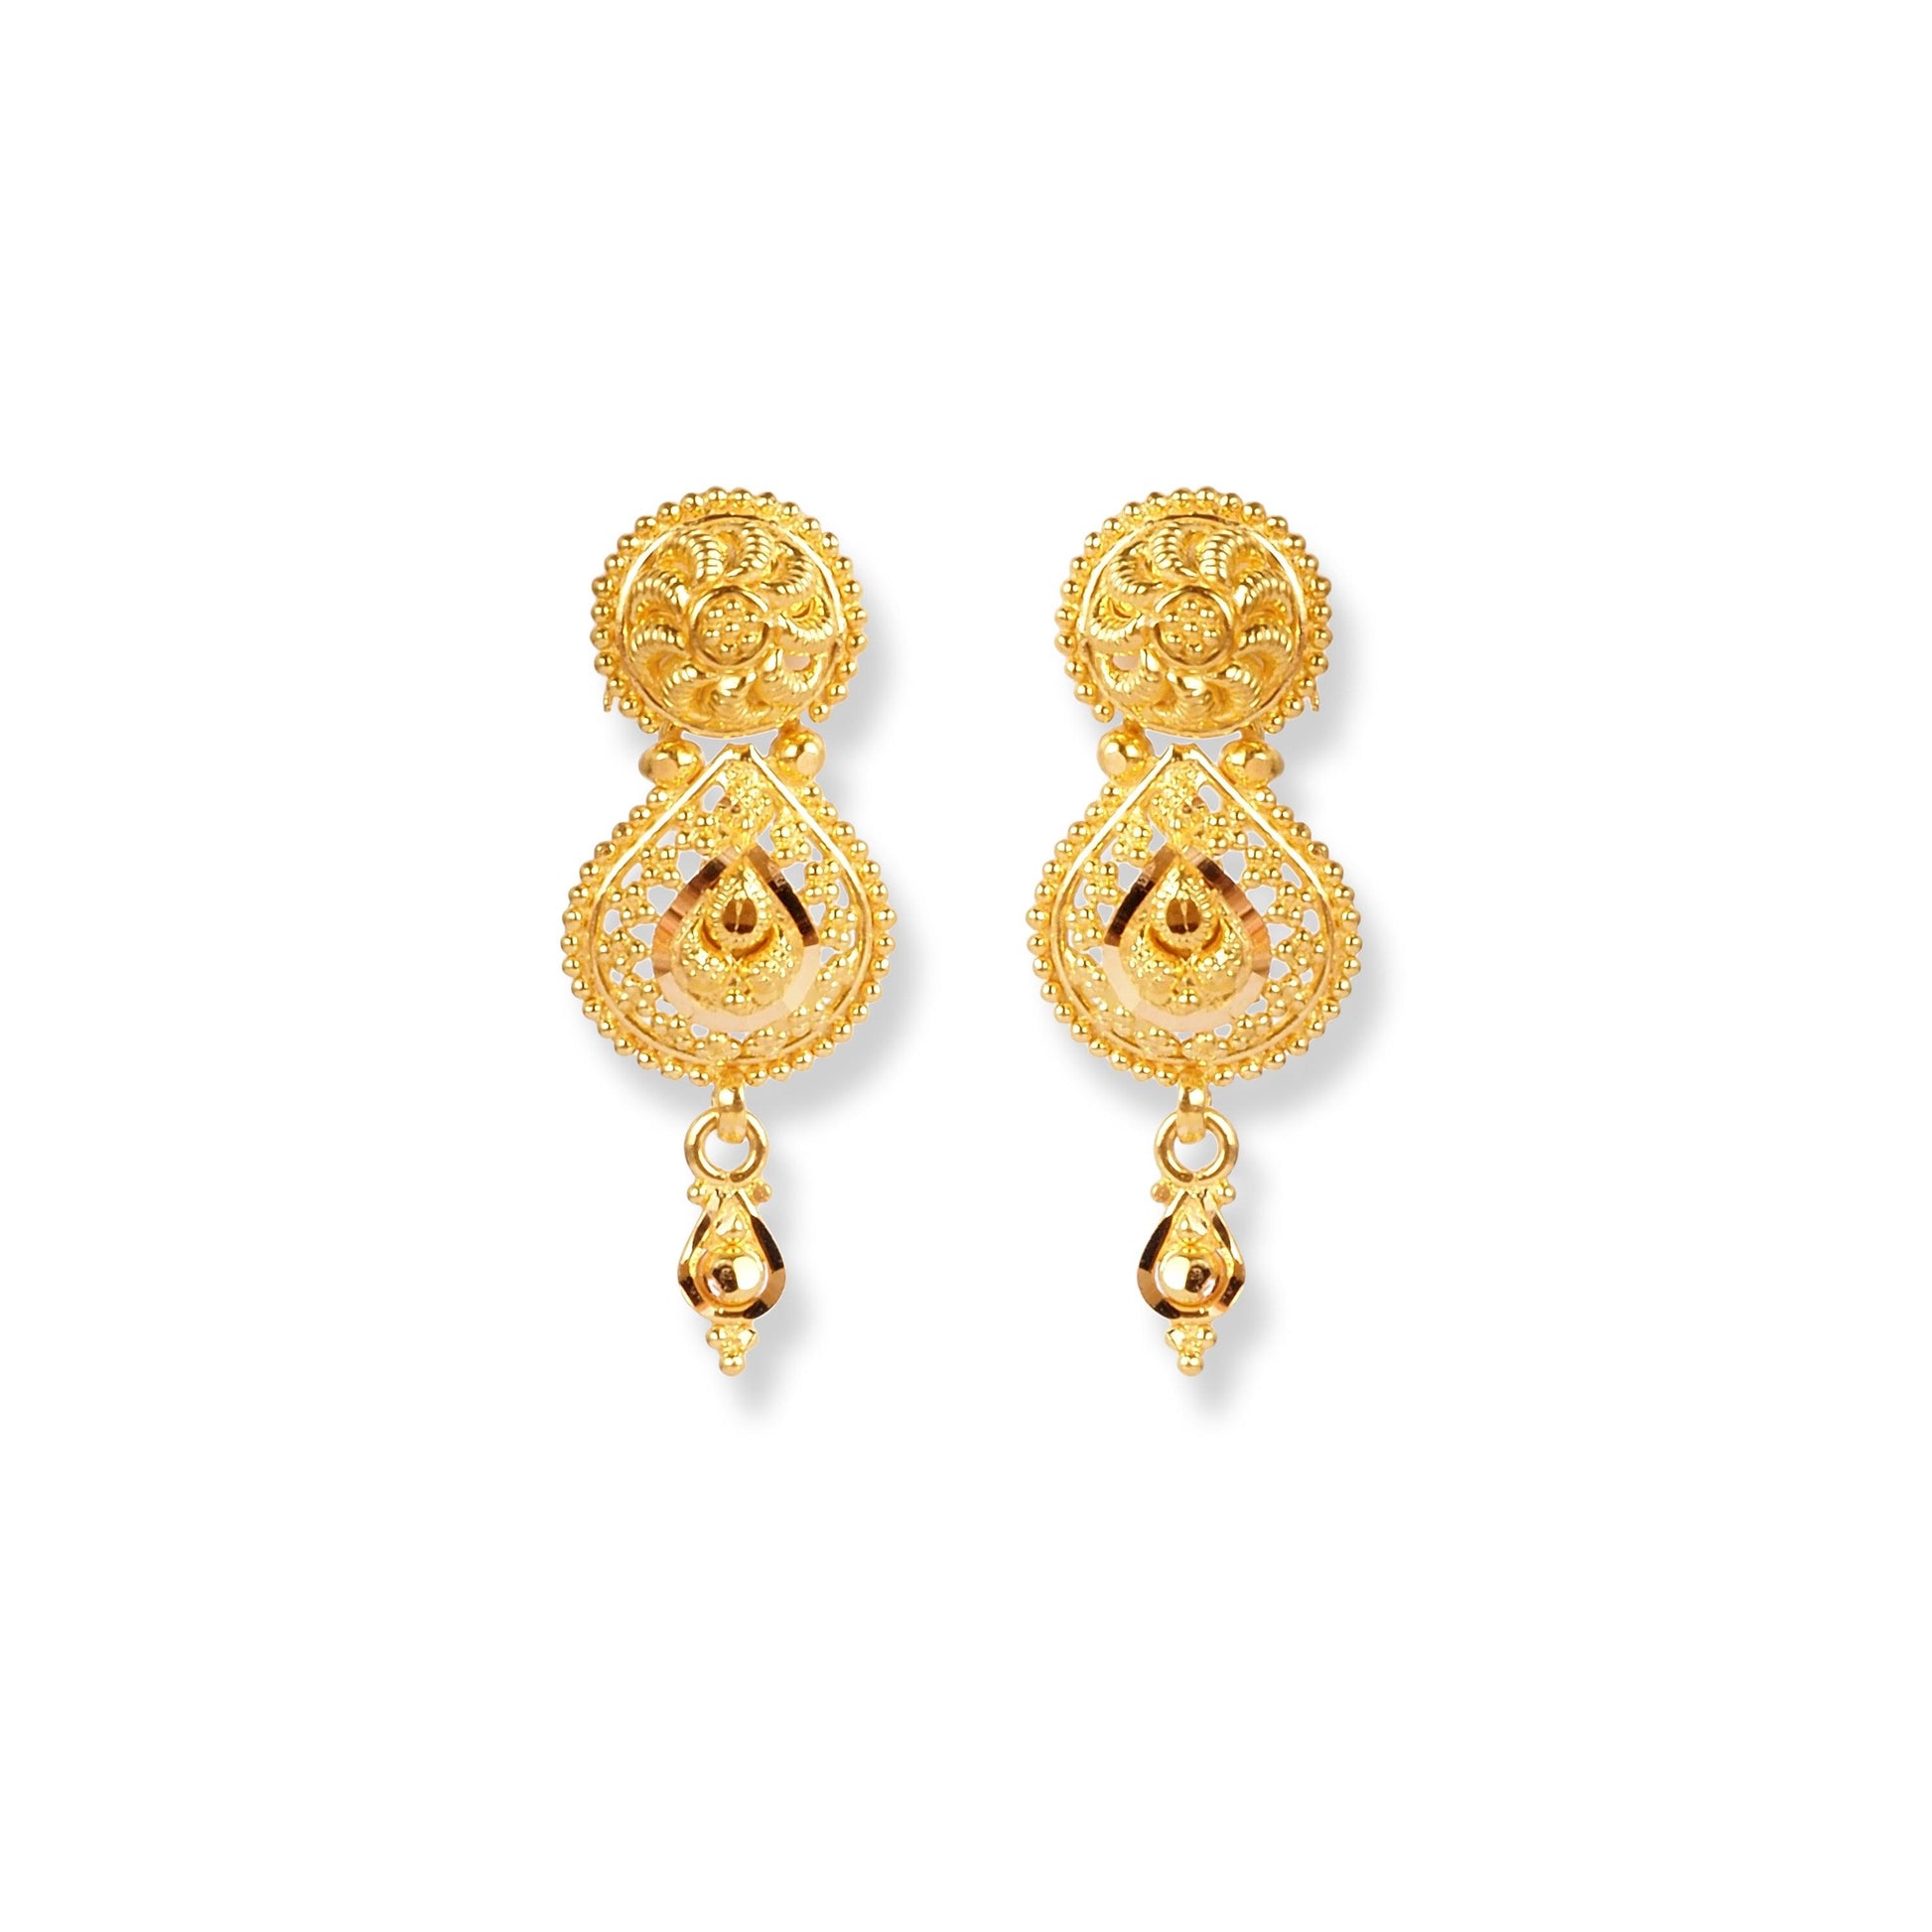 22ct Gold Set with Filigree Work N-7921 - Minar Jewellers